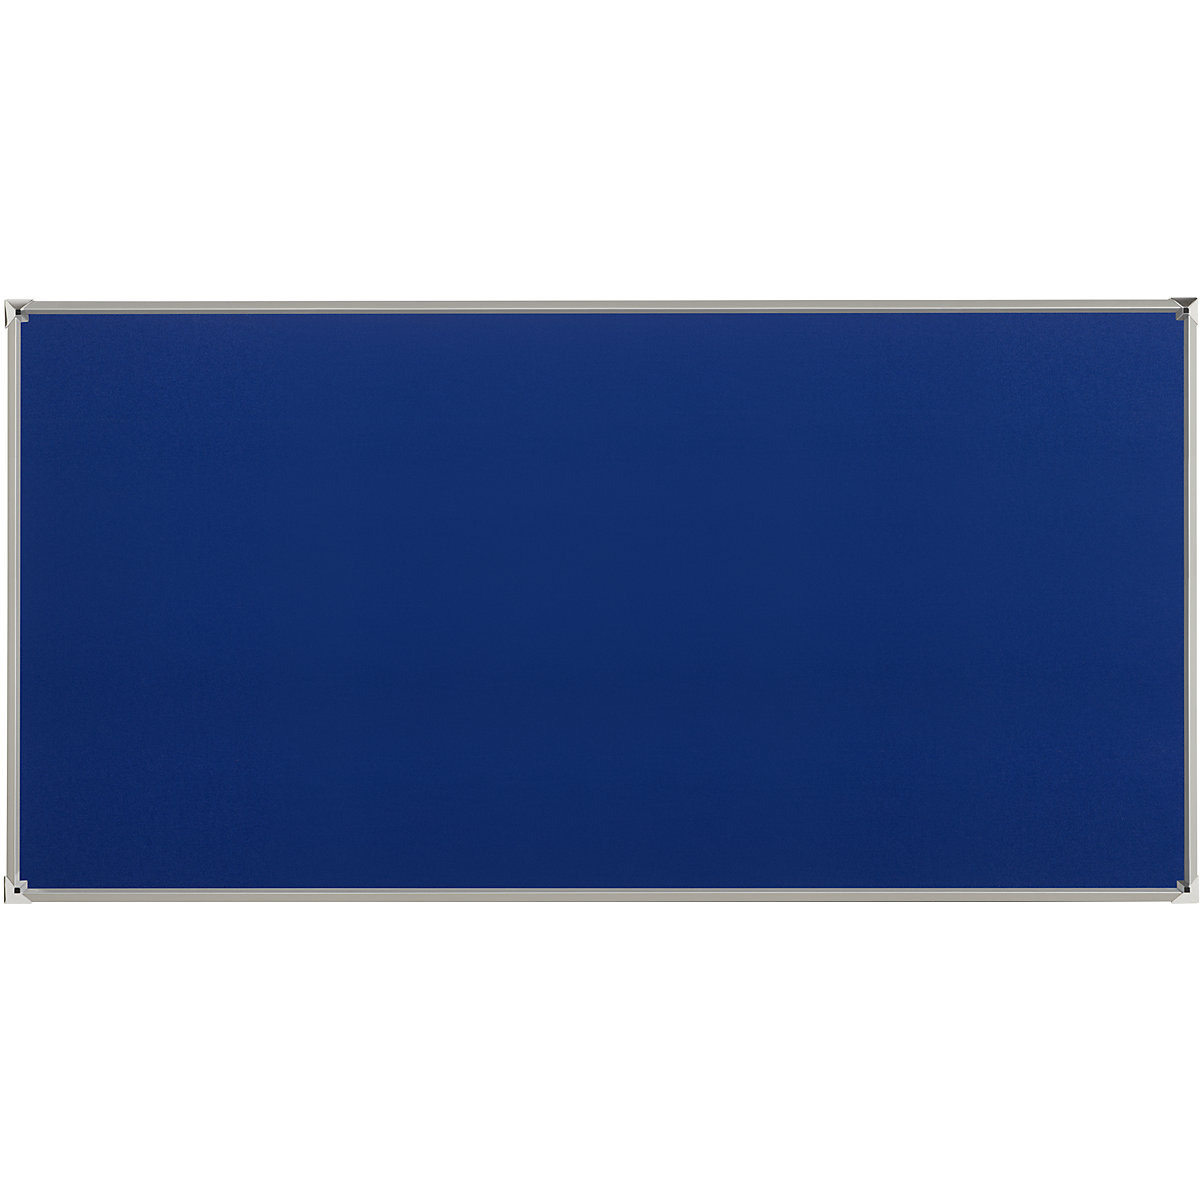 Bacheca con cornice in alluminio – eurokraft pro, tessuto, blu, largh. x alt. 2000 x 1000 mm-6